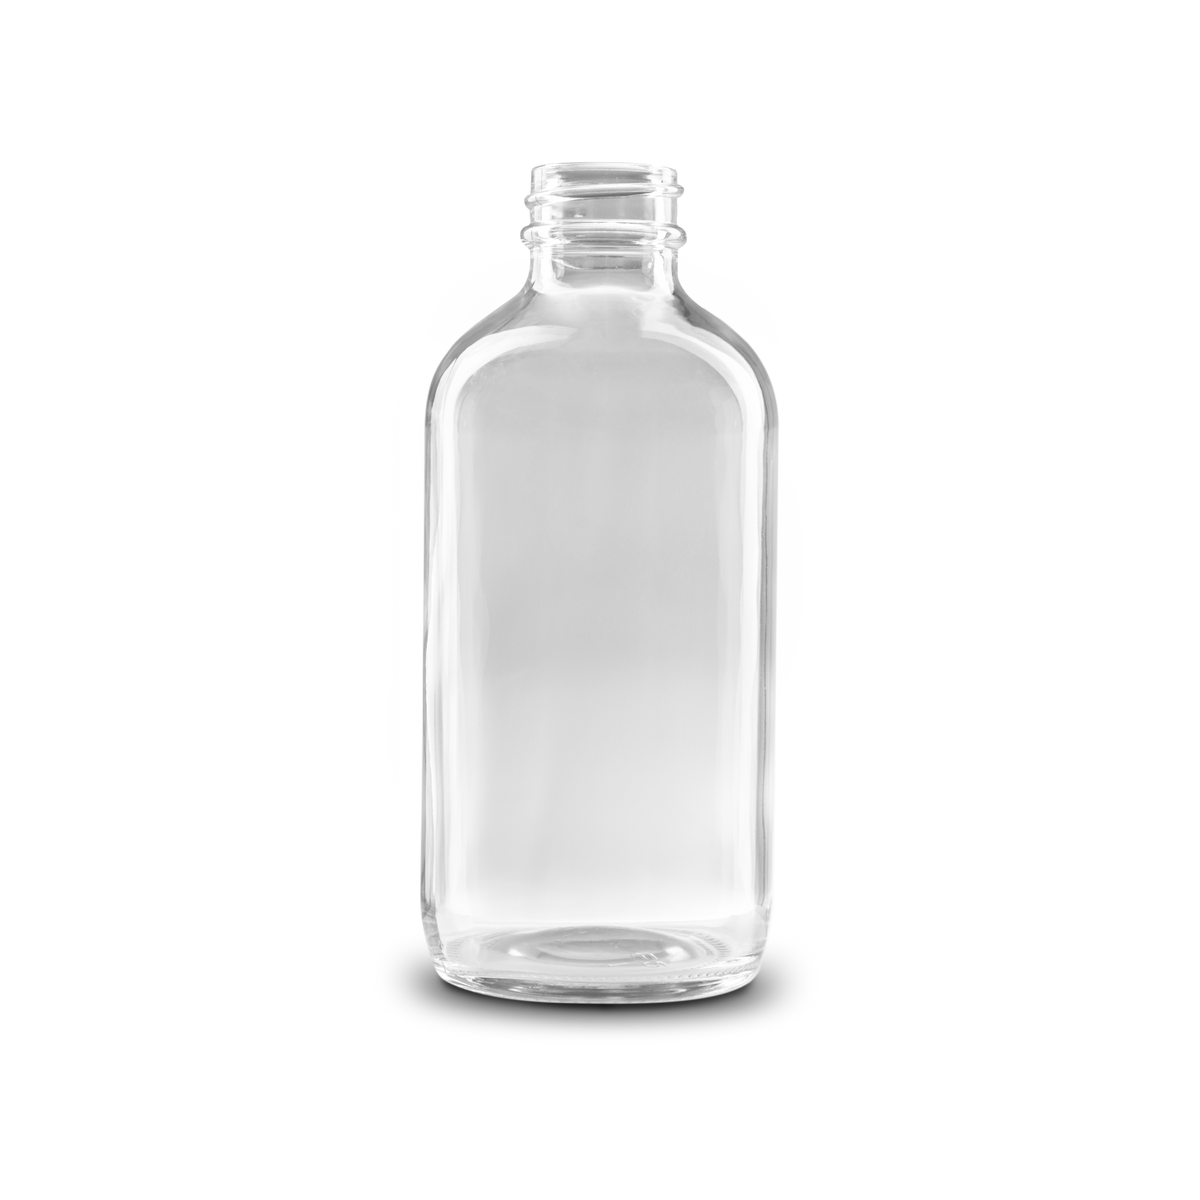 8 oz Clear Boston Round Glass Bottle